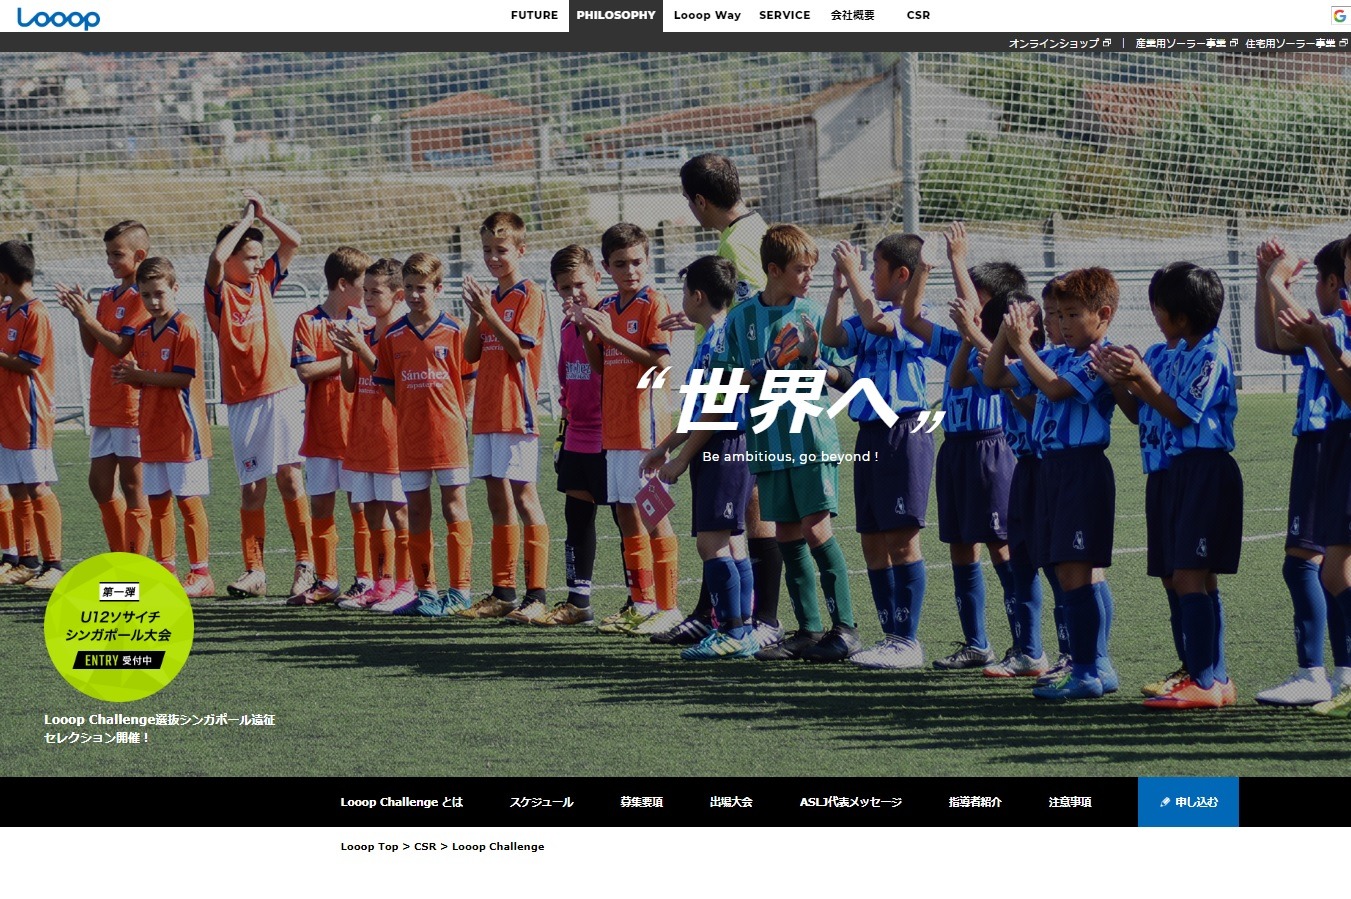 Looop Challenge第1弾 国際u12ソサイチ大会 出場 サッカー少年募集 リセマム